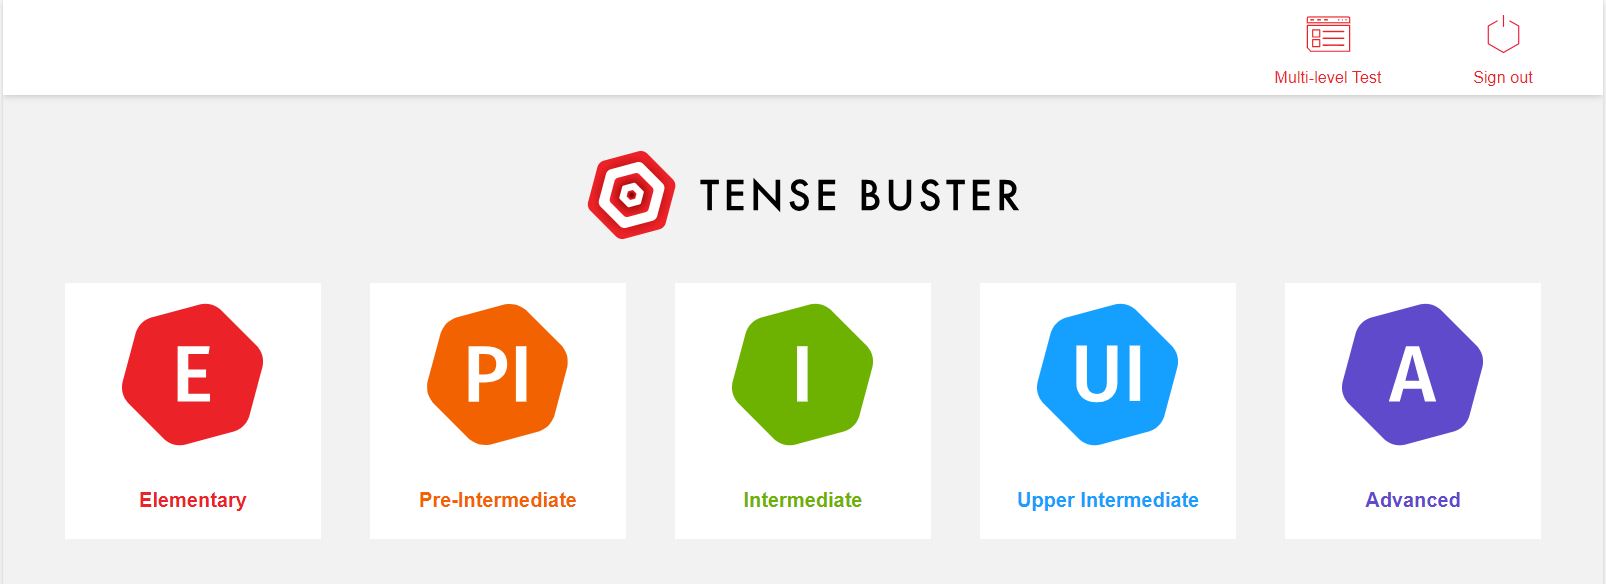 Tense Buster英語自學軟體